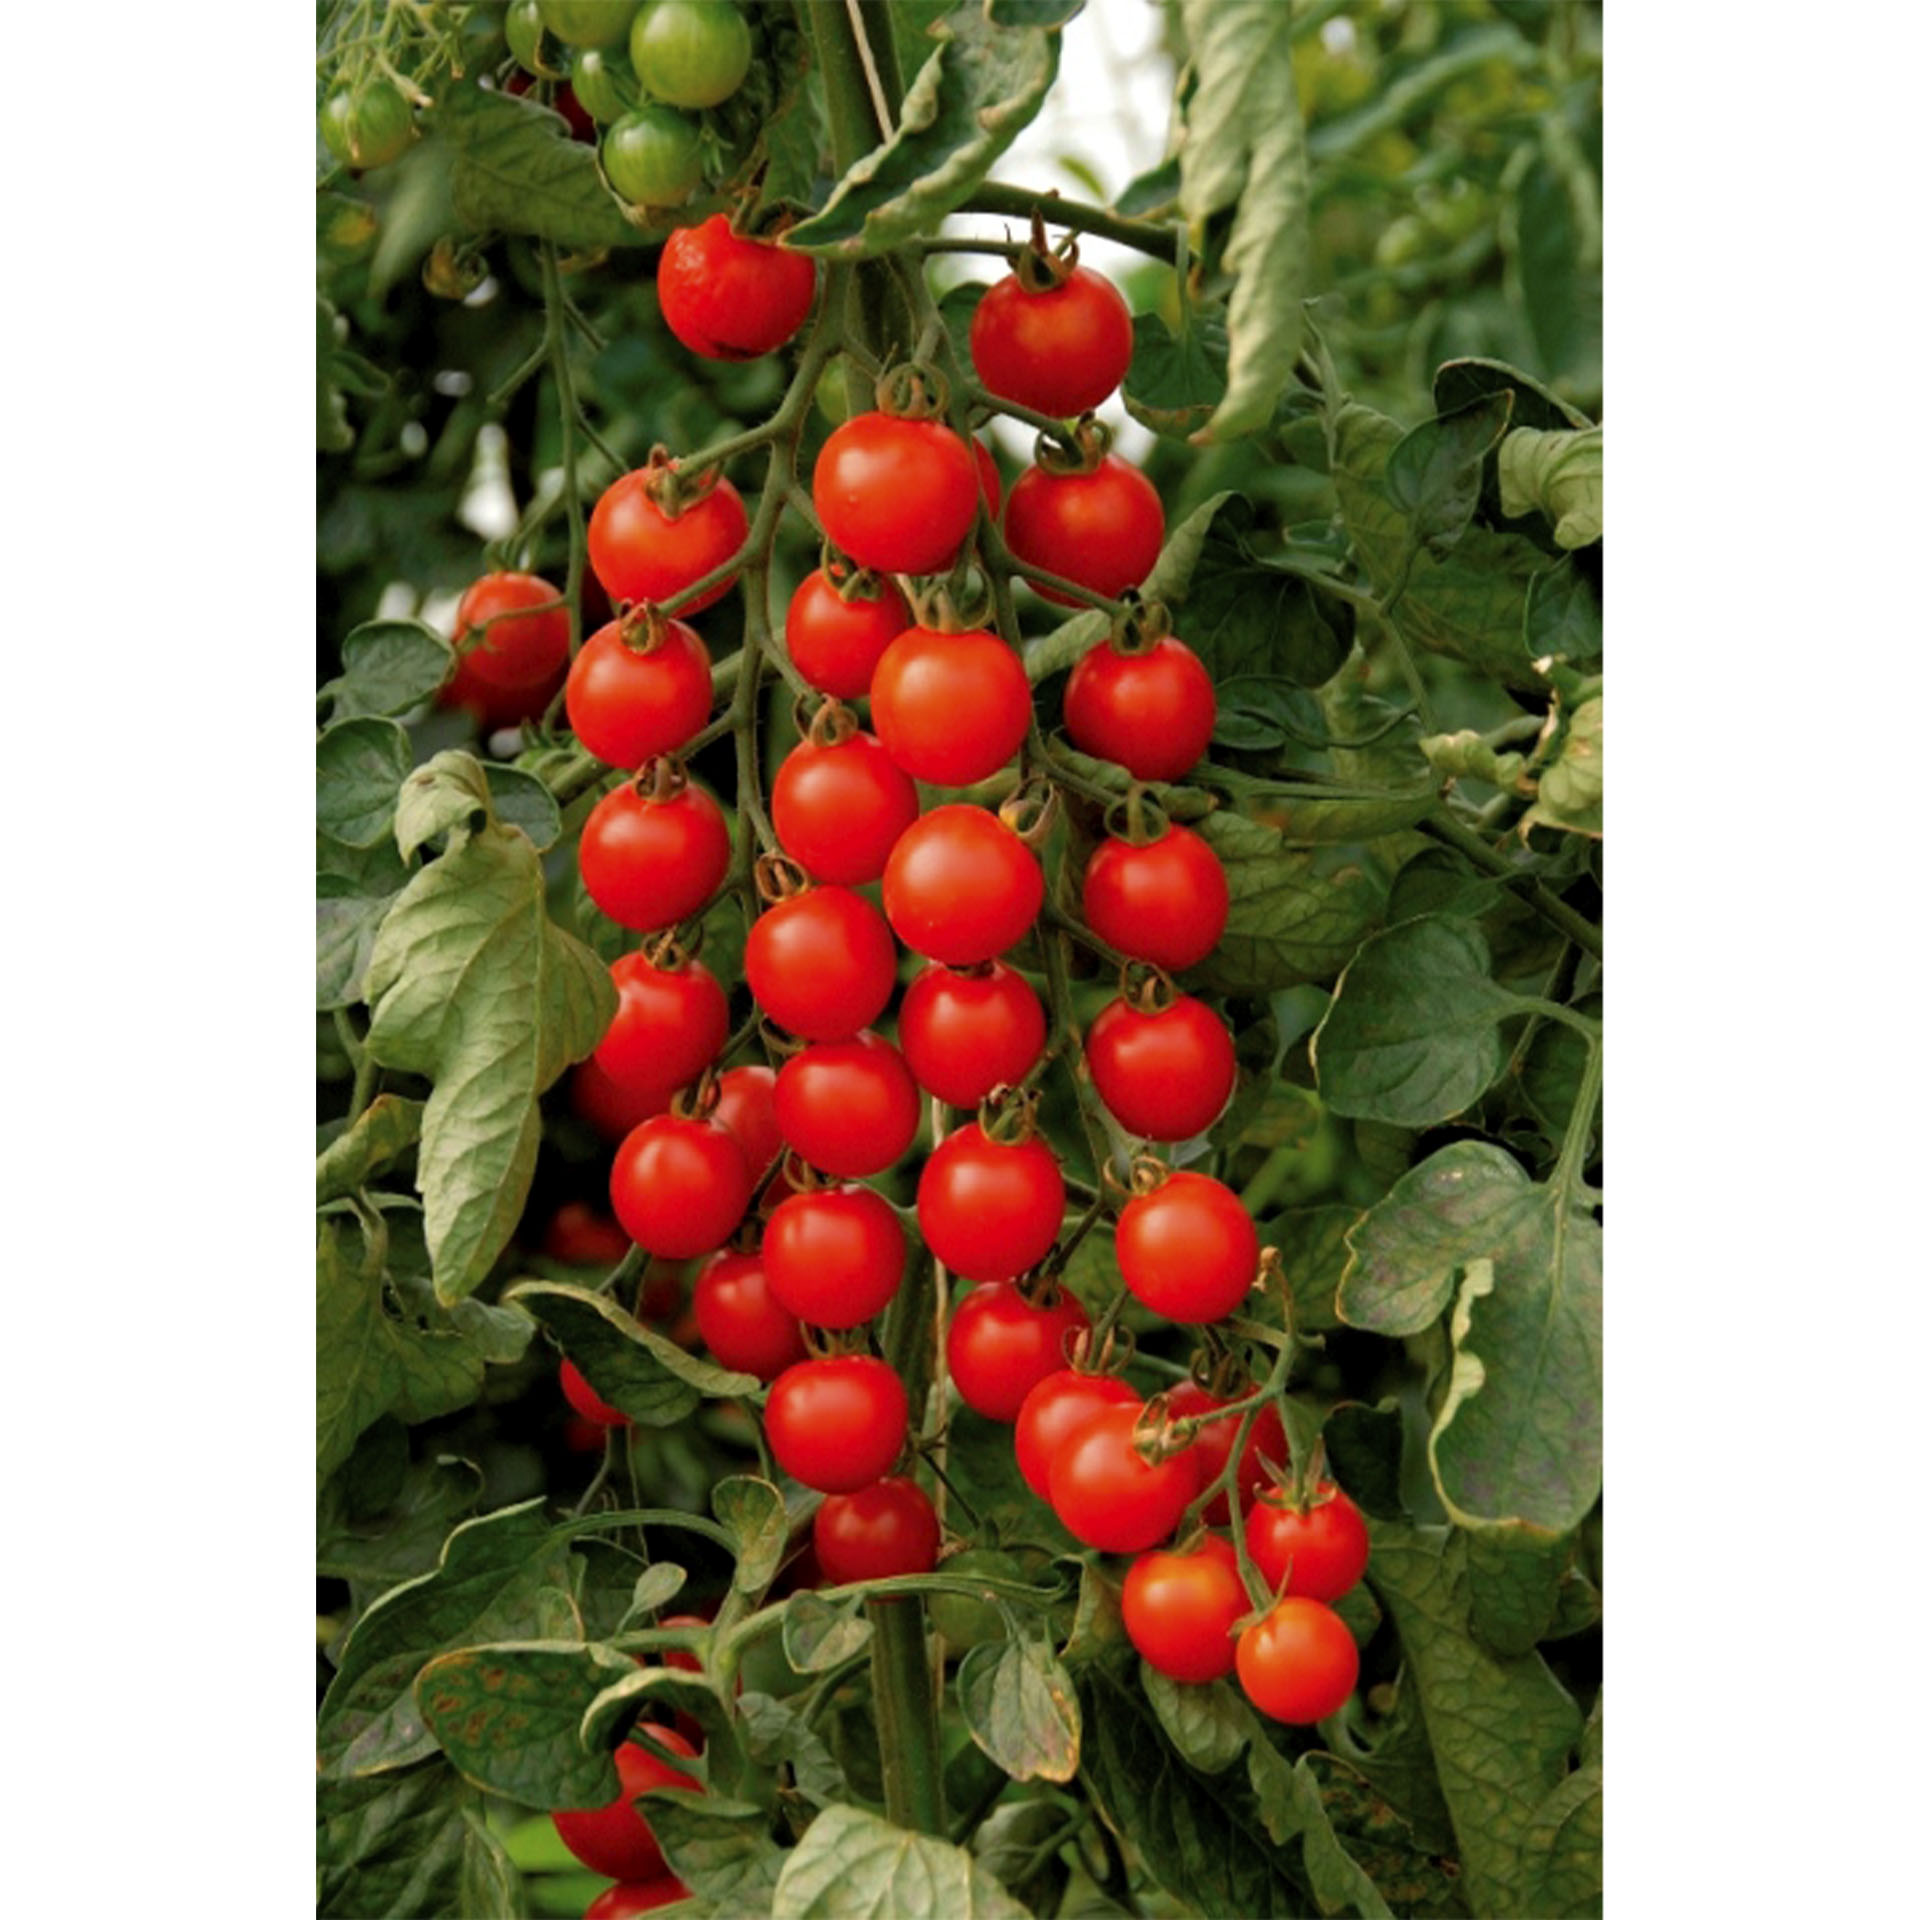 Rispe mit reifen BIO Cherry-Tomaten